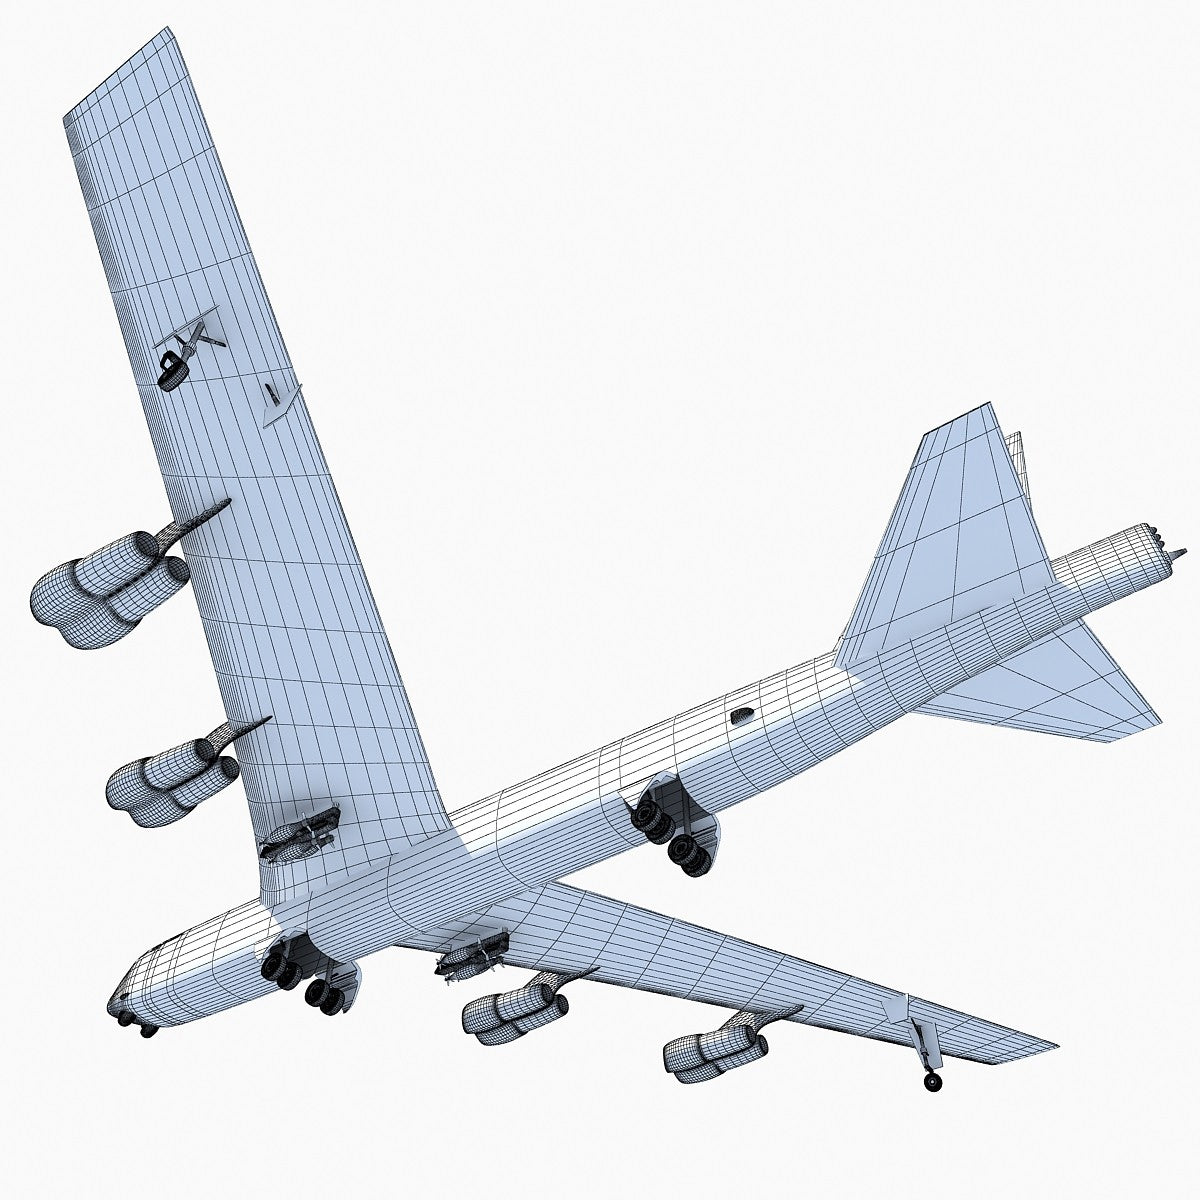 Boeing B-52 3D Model